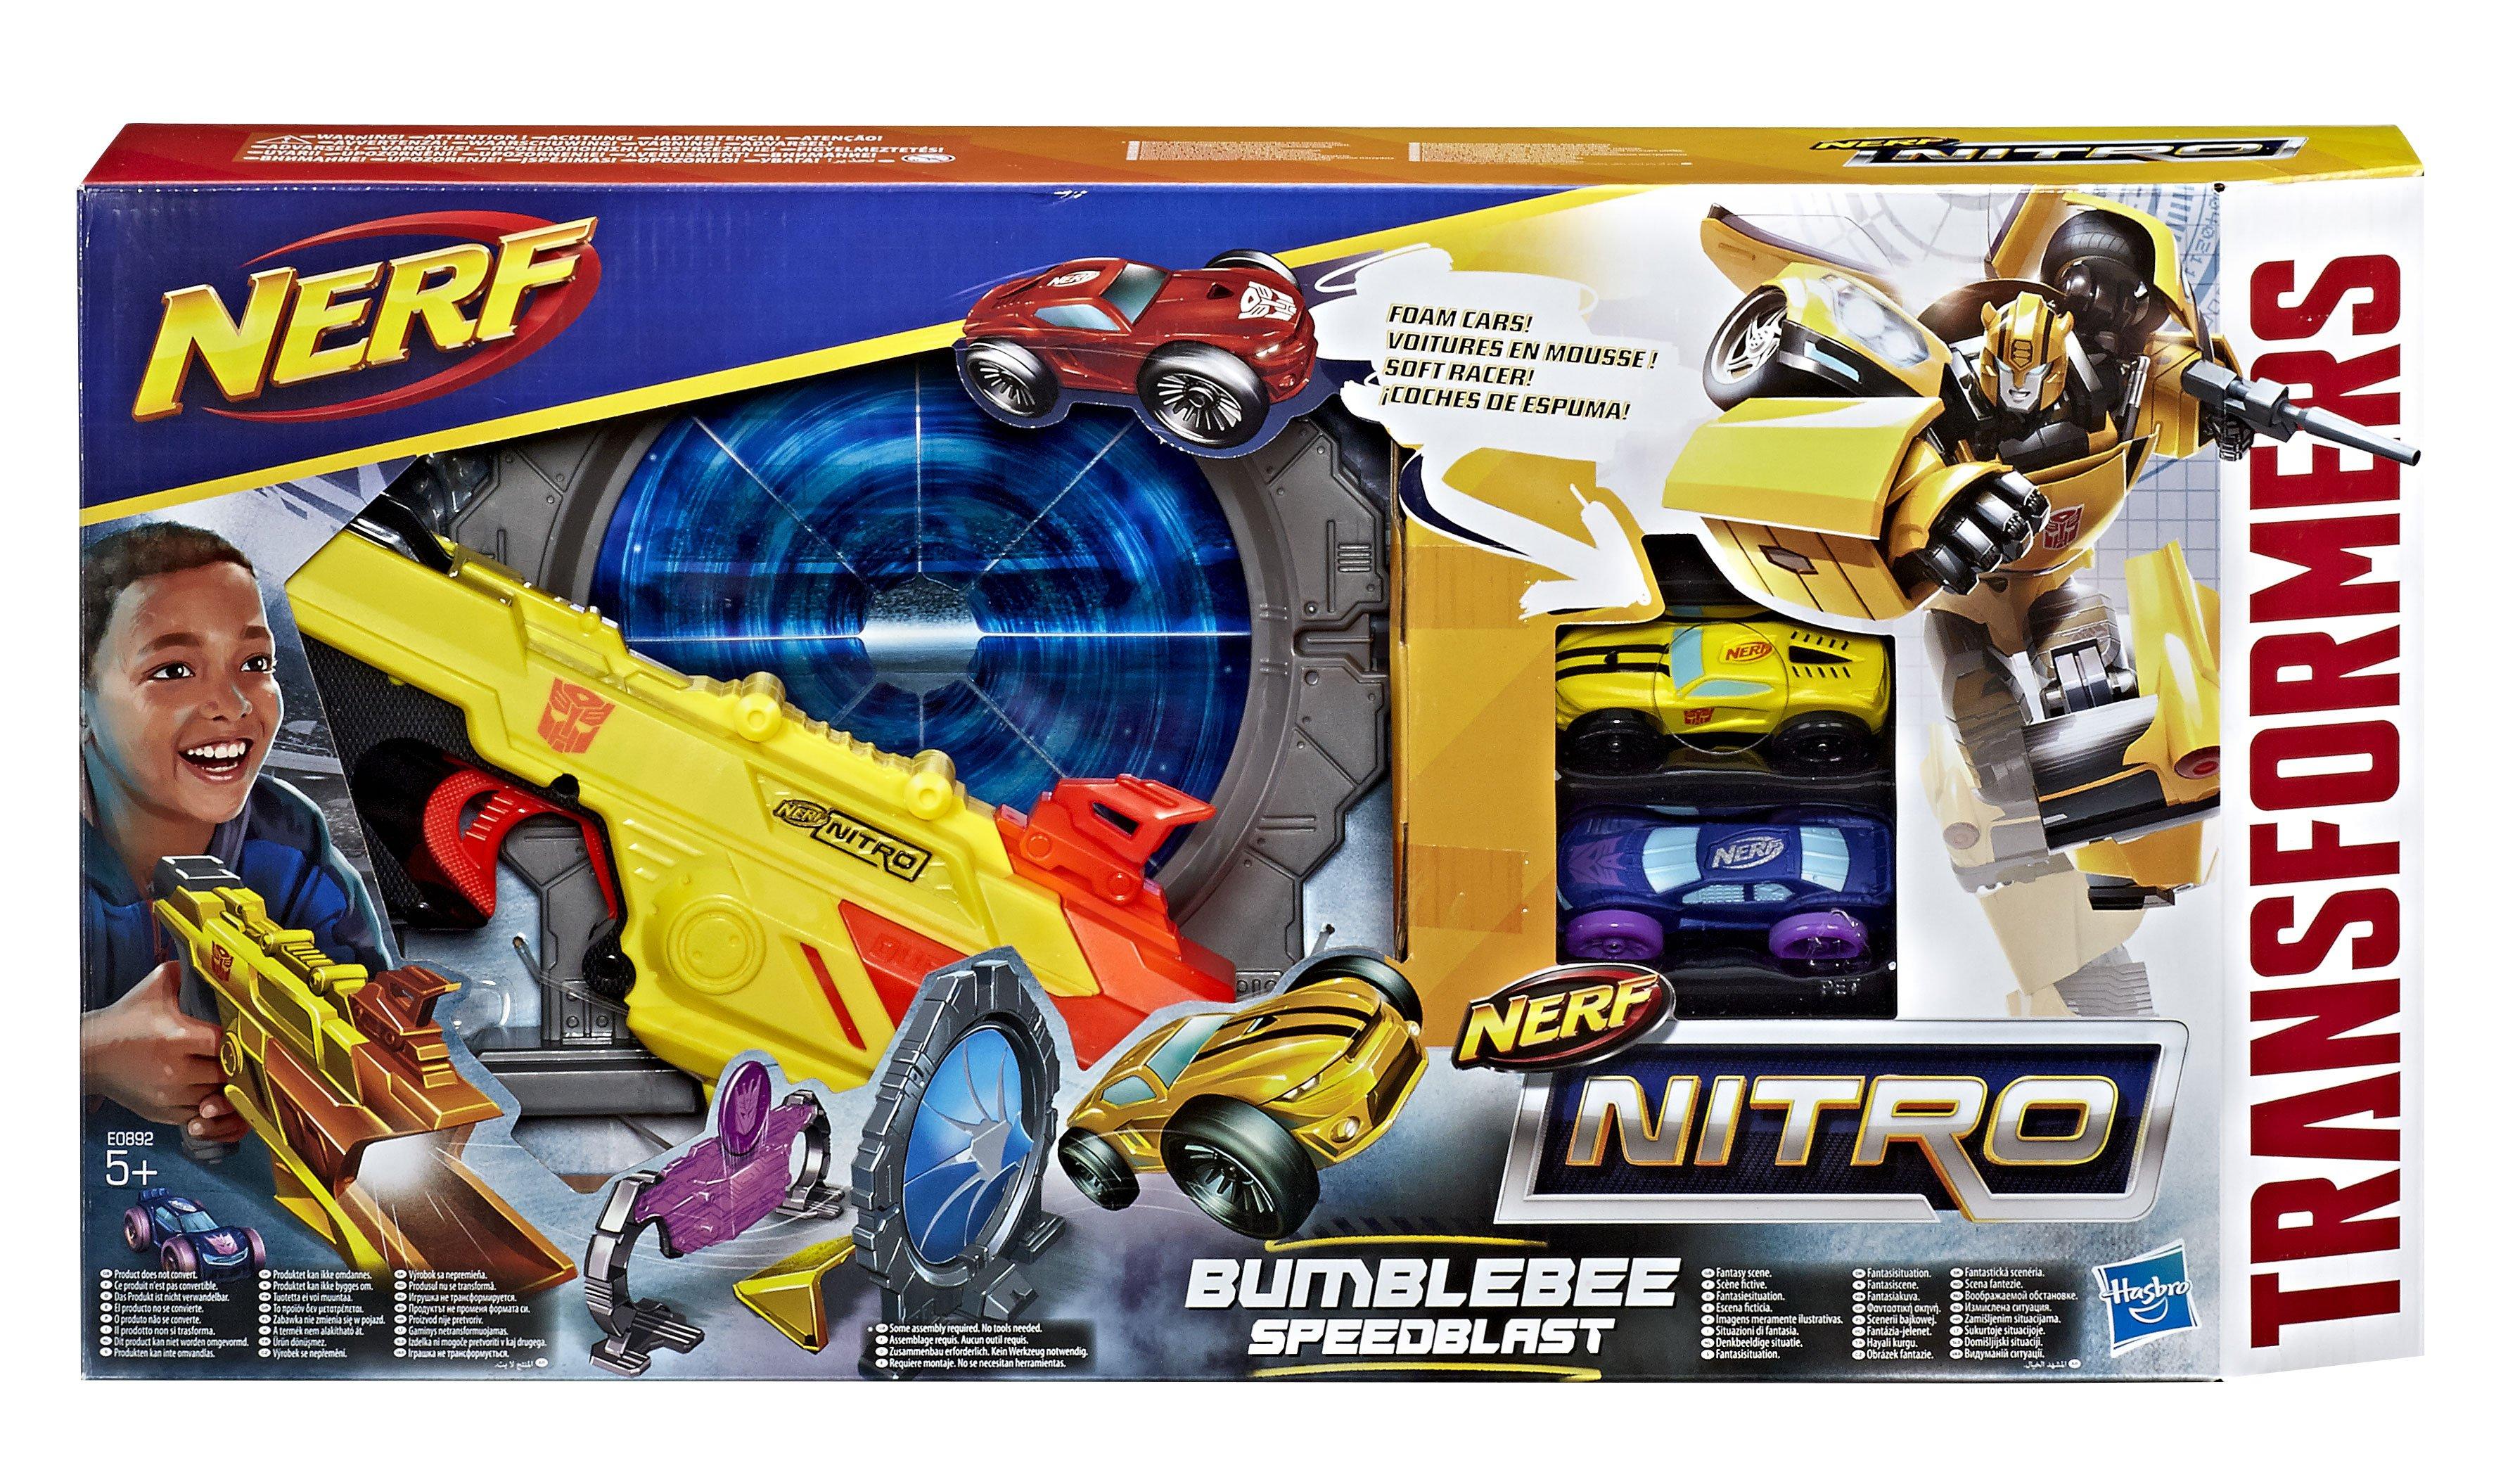 Nerf Nitro Bumblebee Speedblast Only at 